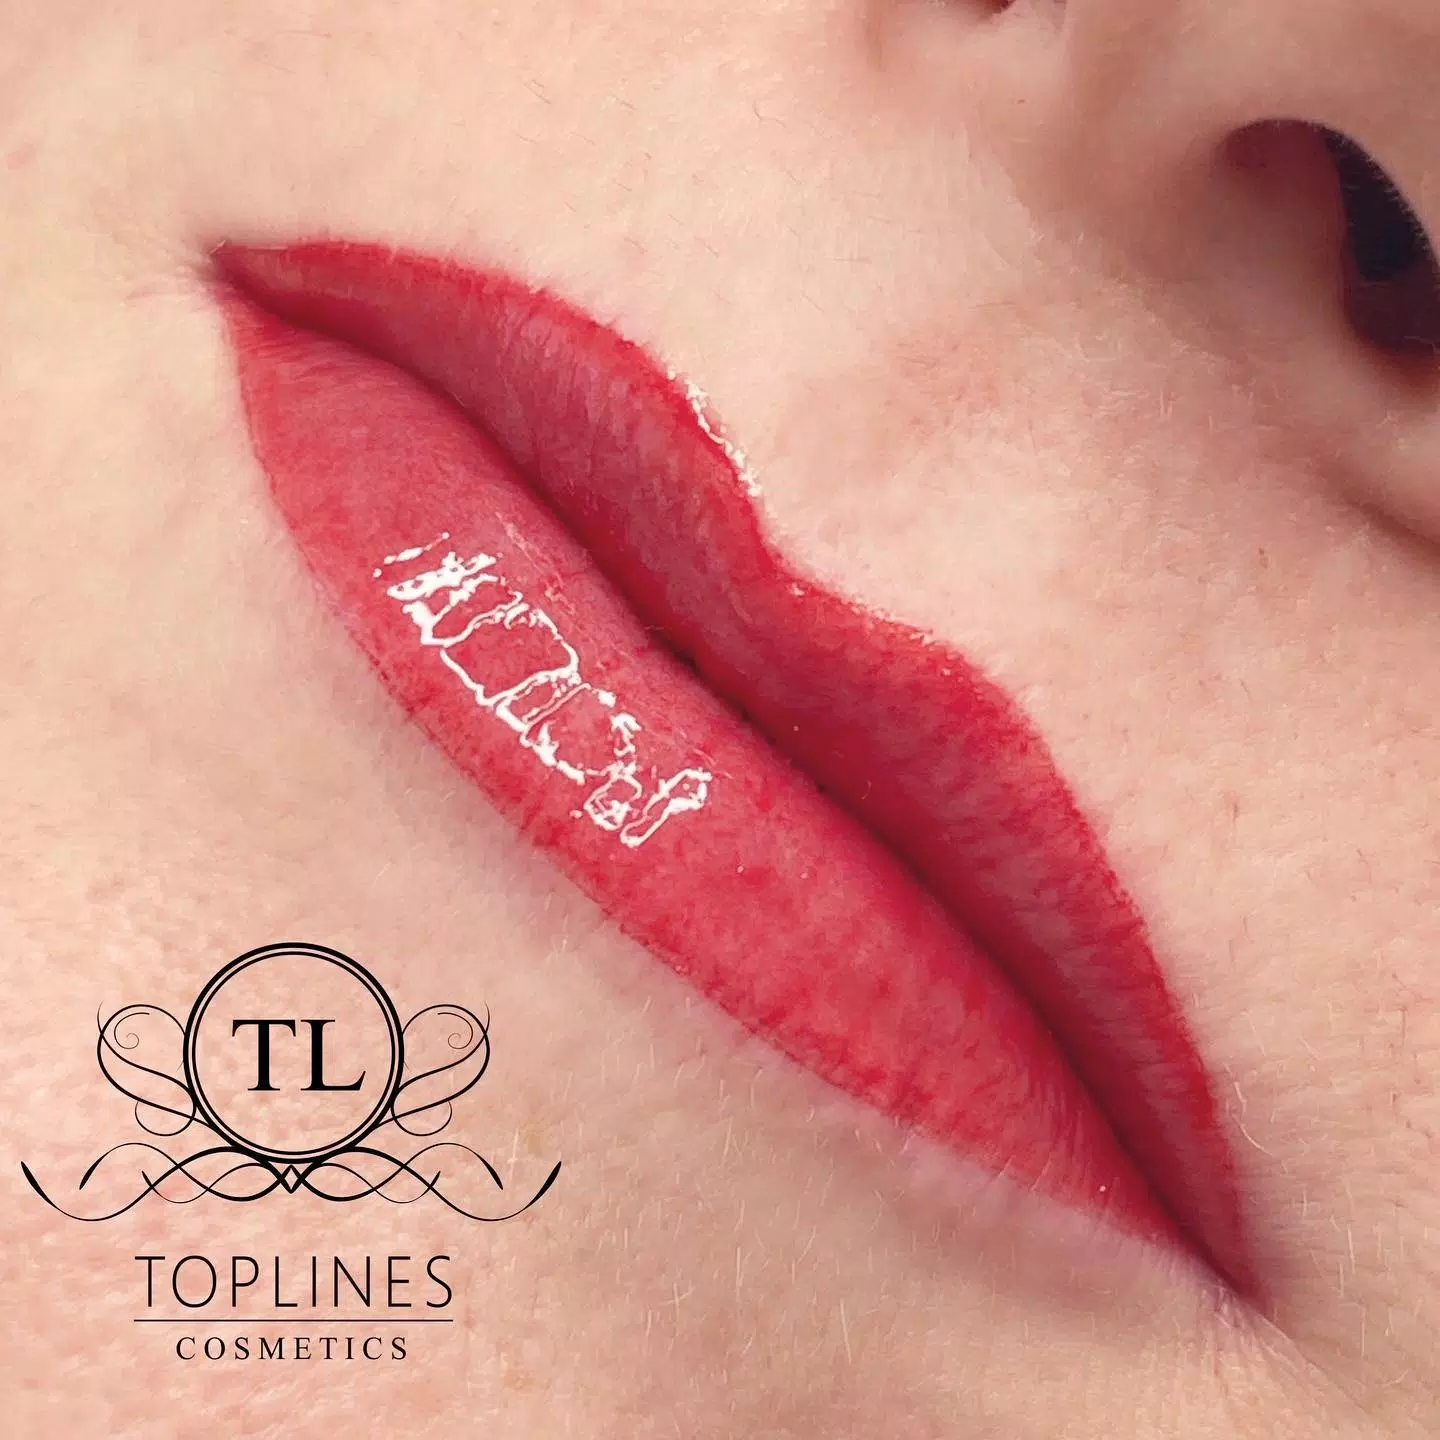 🍓red lips 🍓 #lippenpigmentation #pmu #lippenpigmentieren #nicelips #toplines #affolternamalbis #kosmetik